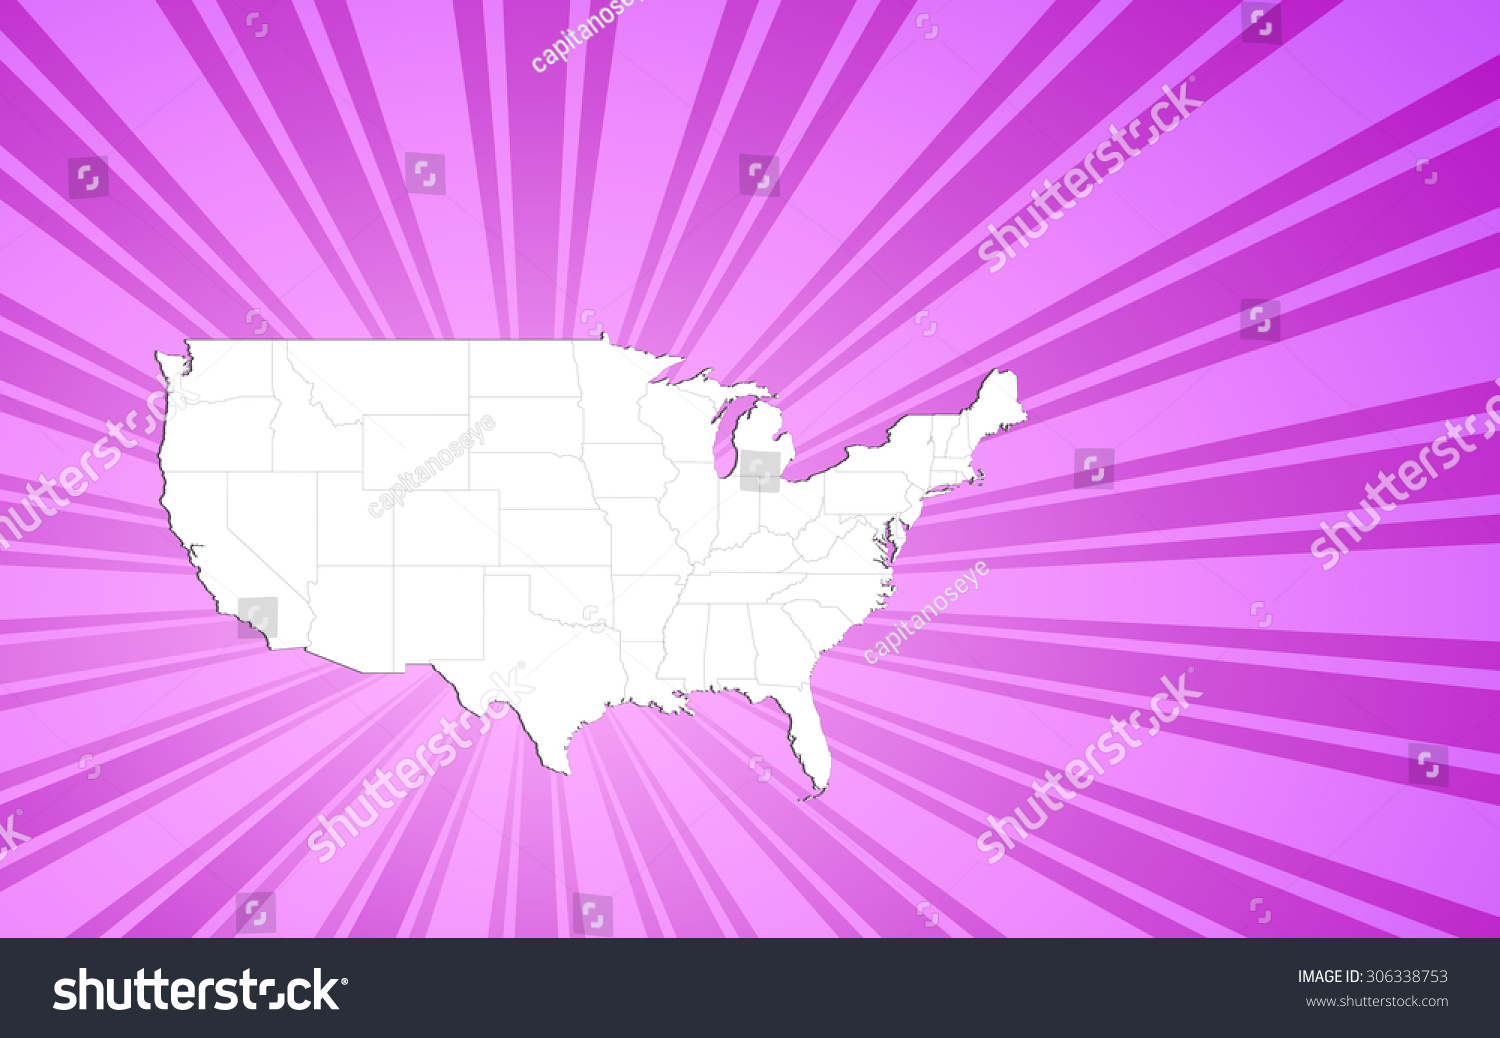 Map United States America Vector Illustration Vector De Stock Libre De Regalías 306338753 5450